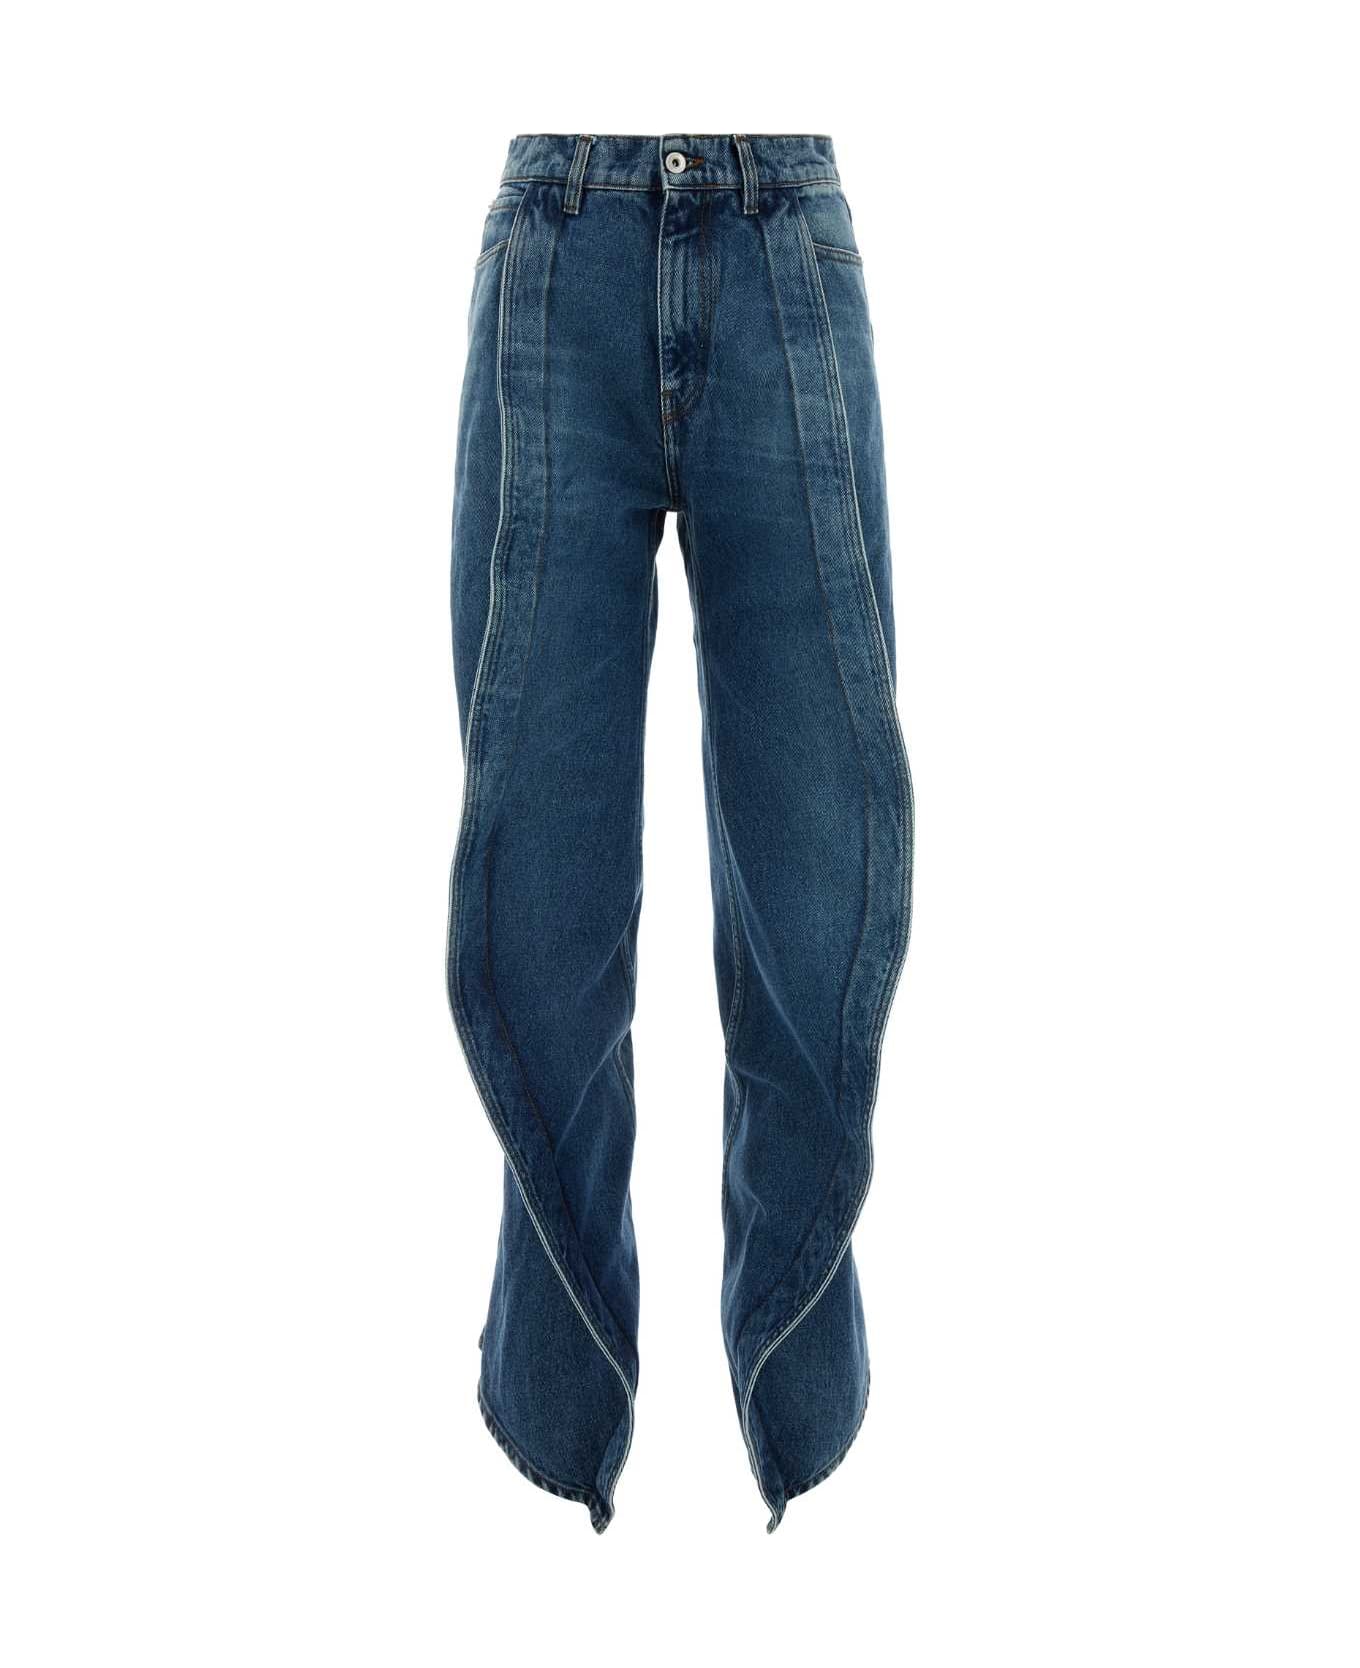 Y/Project Denim Jeans - EVERGREEN VINTAGE BLUE